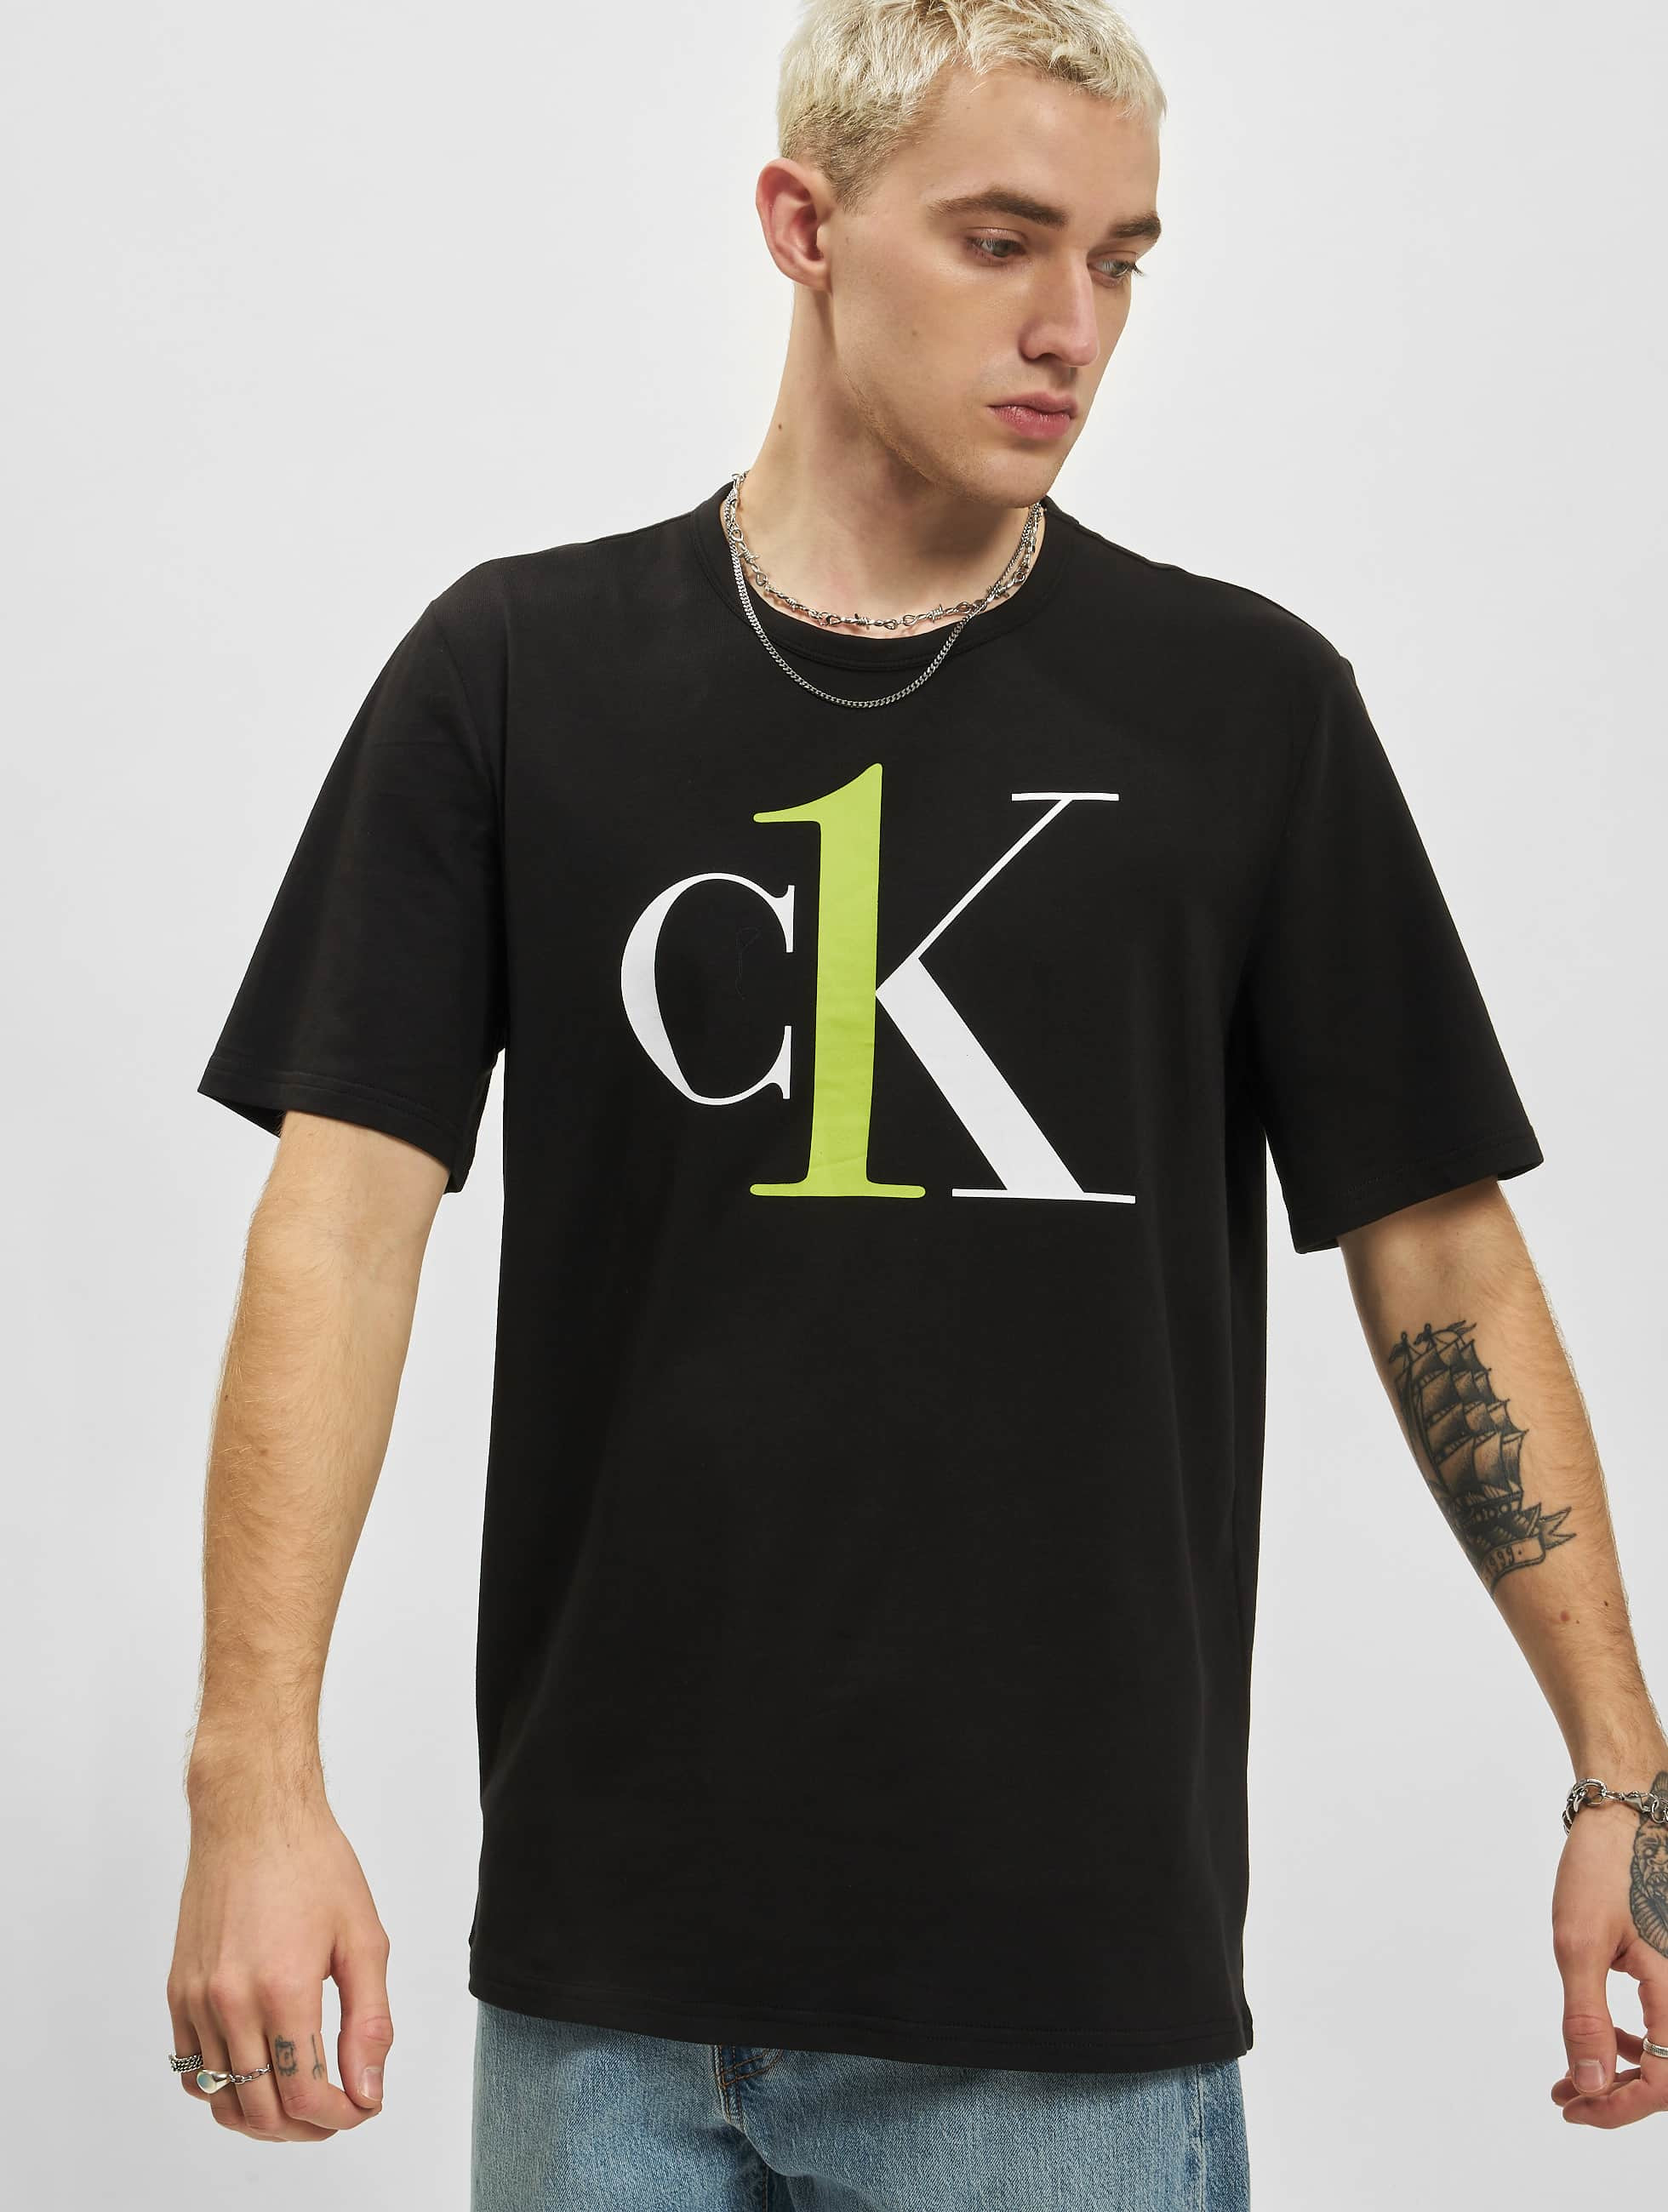 Moderator ontsmettingsmiddel optie Calvin Klein bovenstuk / t-shirt Crewneck in zwart 957398